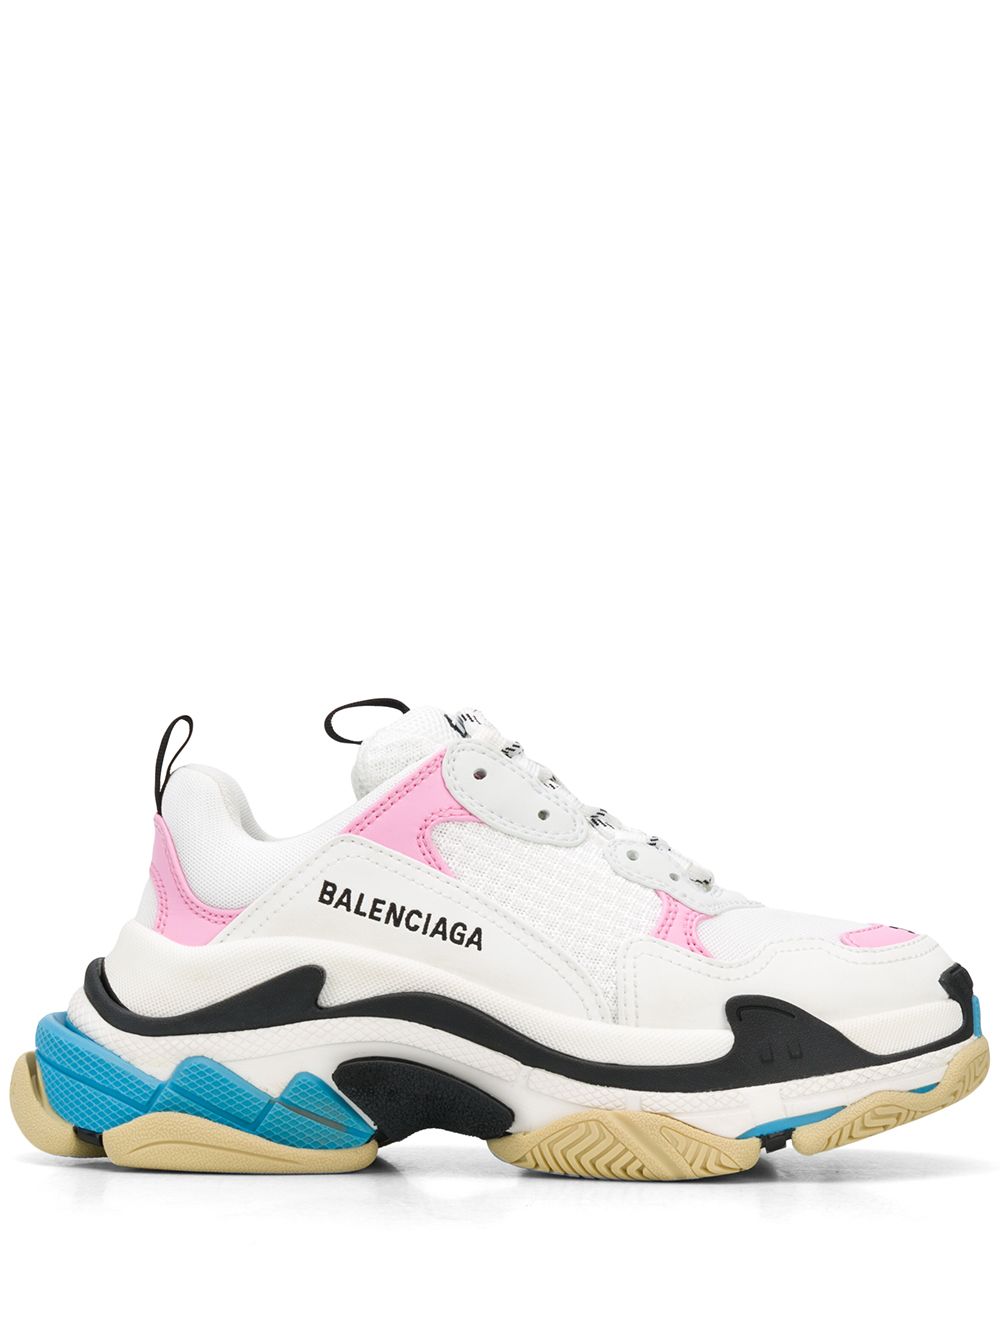 Triple S Sneakers дамски обувки Balenciaga